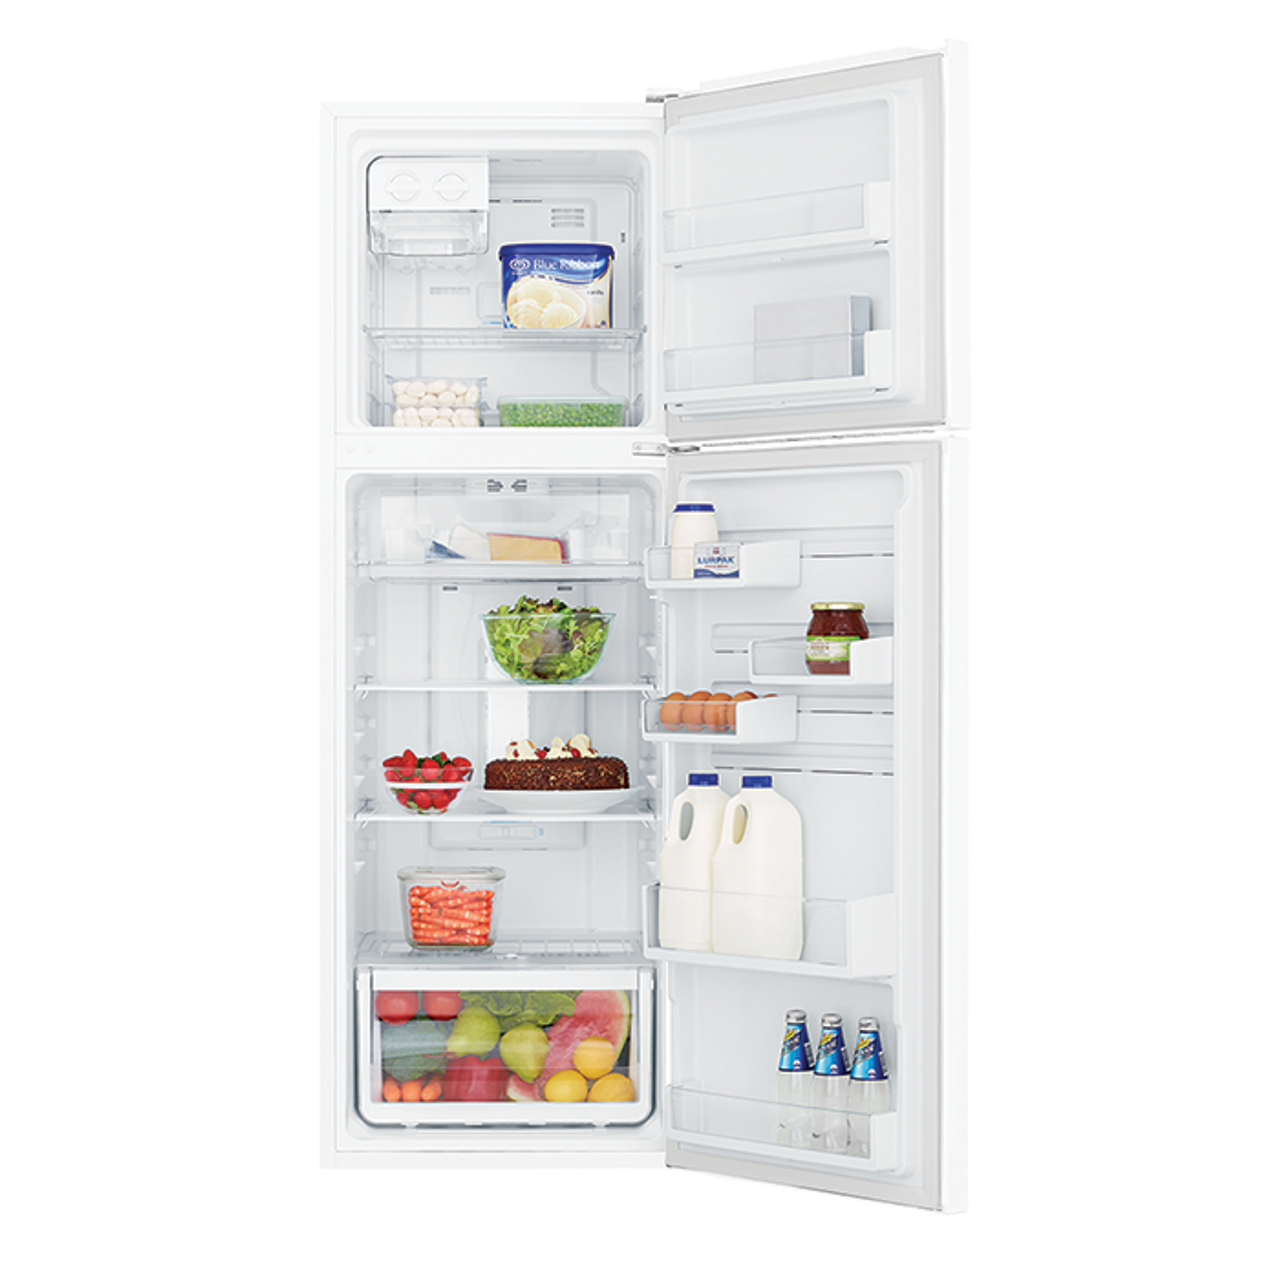 WTB2800WH - 280L Top Mount Refrigerator - White